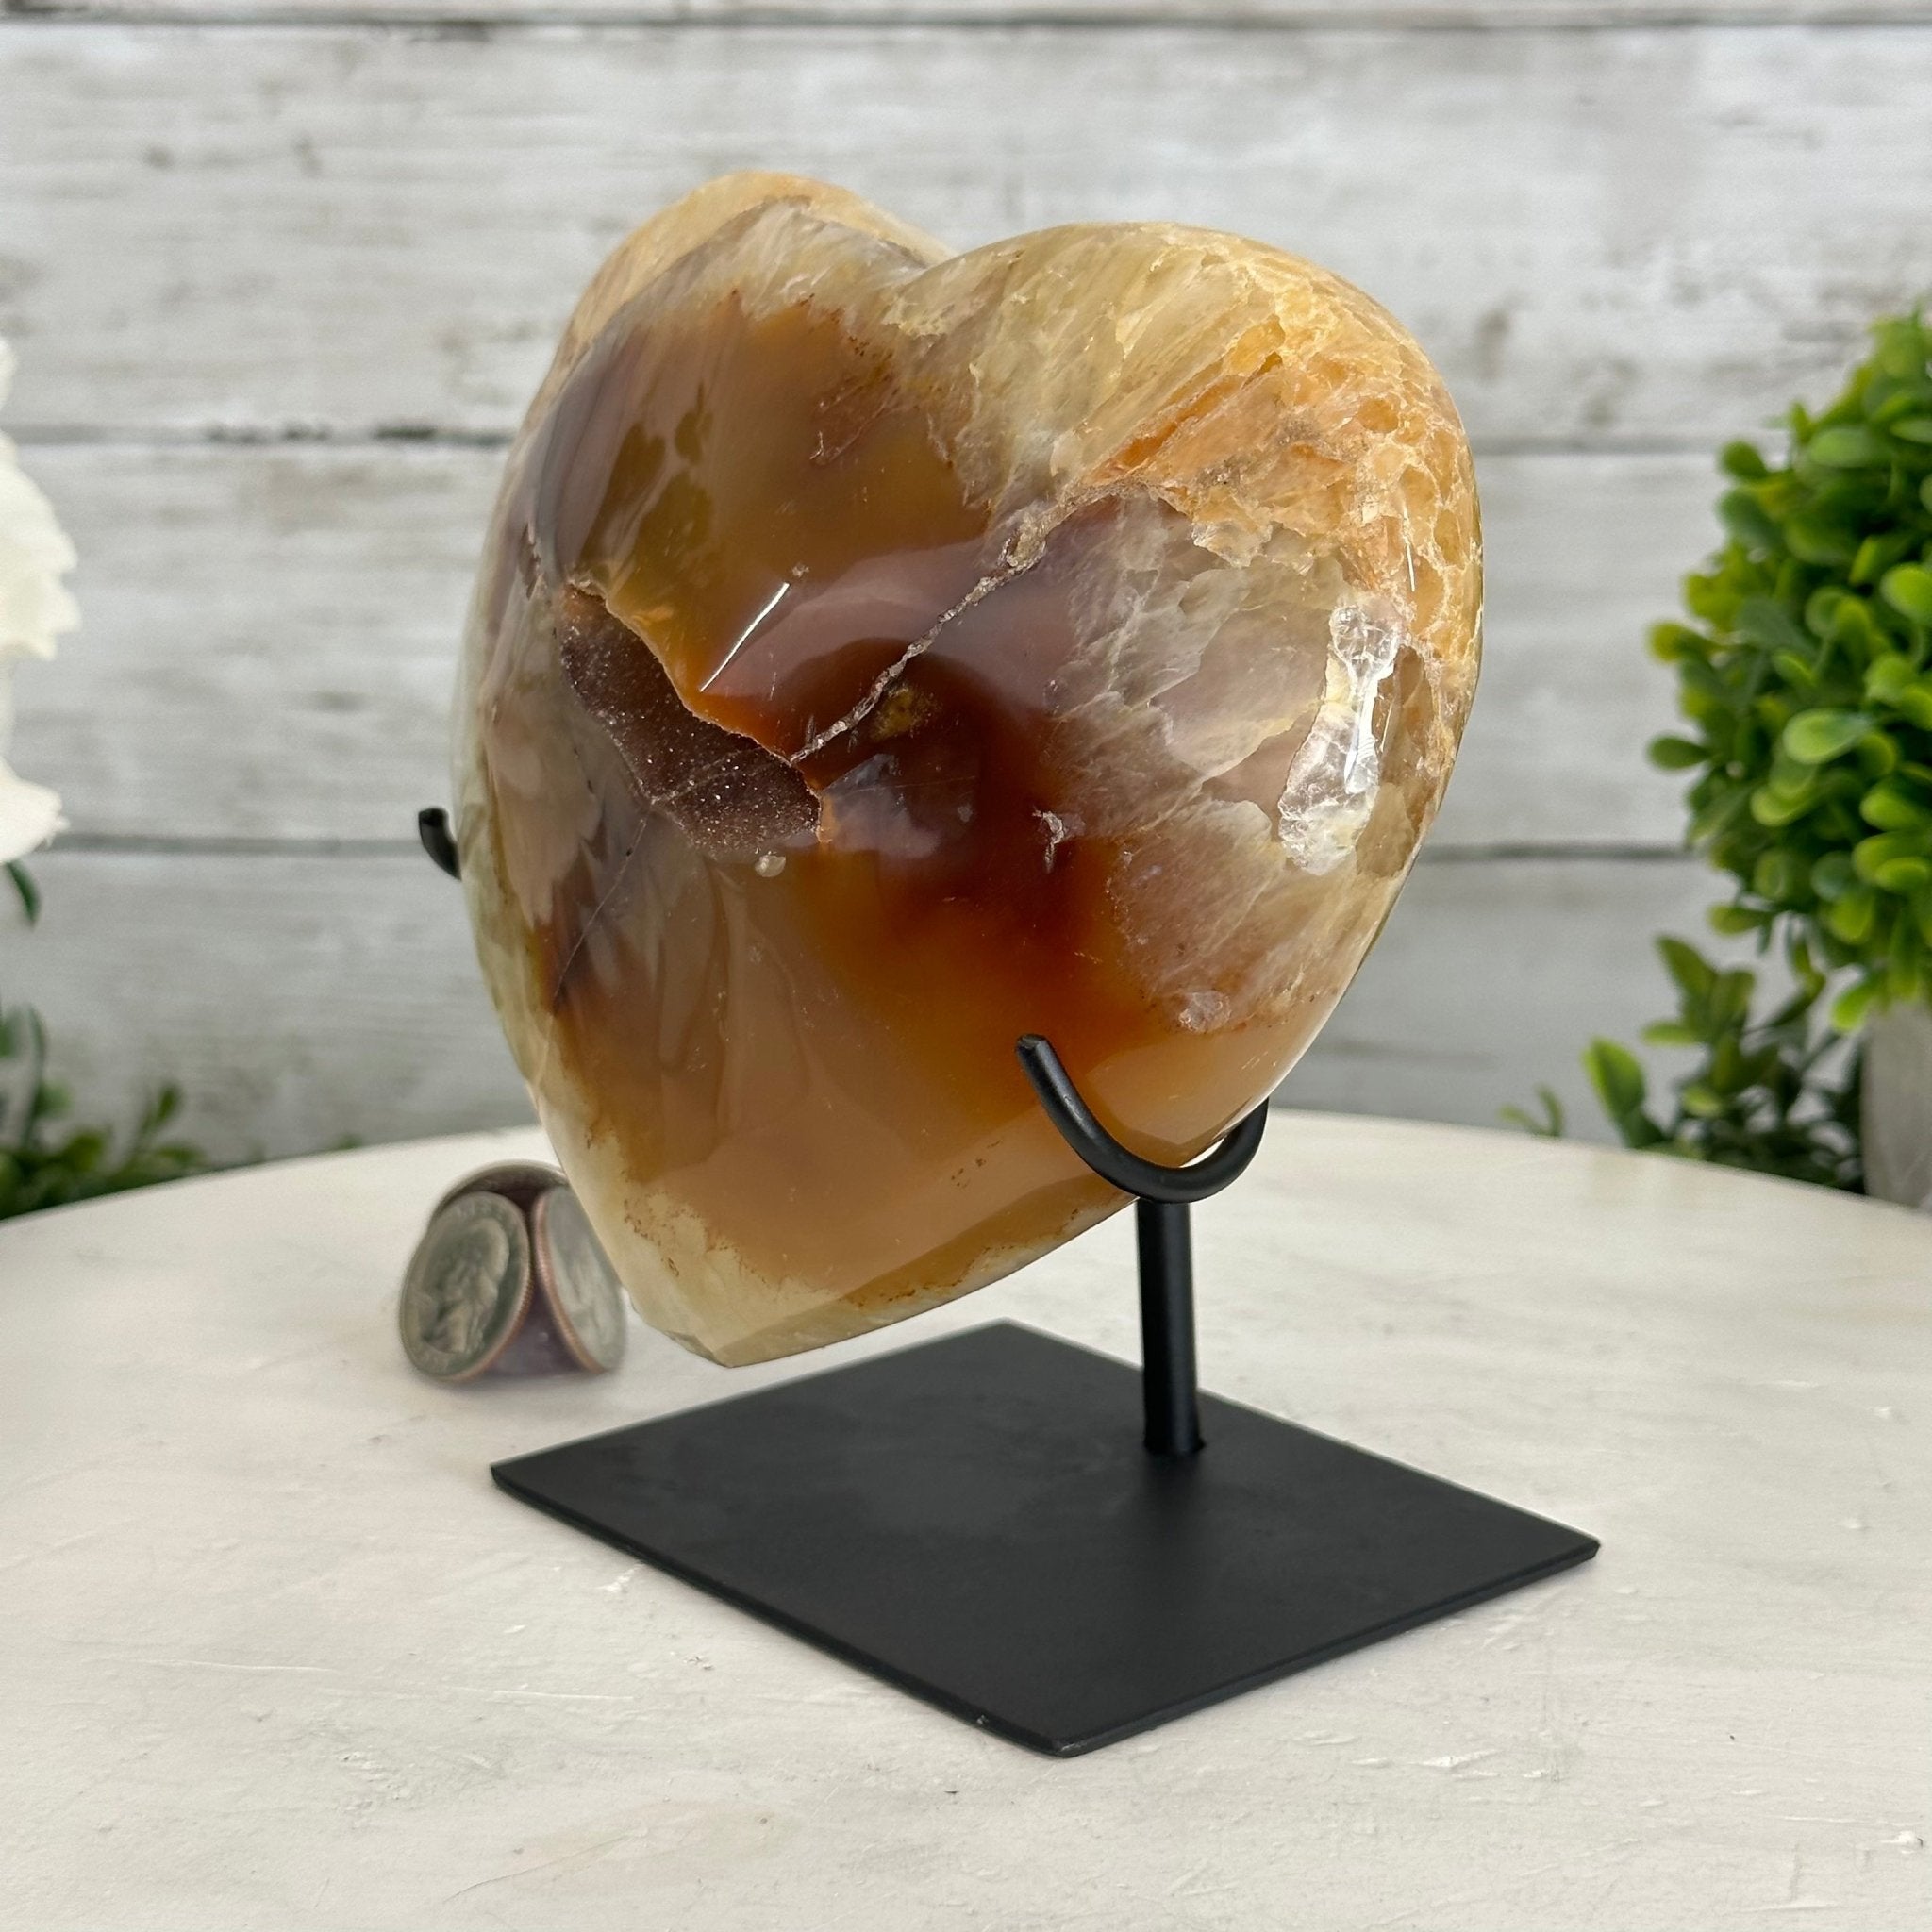 Polished Agate Heart Geode on a Metal Stand, 3.6 lbs & 6" Tall, Model #5468-0061 by Brazil Gems - Brazil GemsBrazil GemsPolished Agate Heart Geode on a Metal Stand, 3.6 lbs & 6" Tall, Model #5468-0061 by Brazil GemsHearts5468-0061